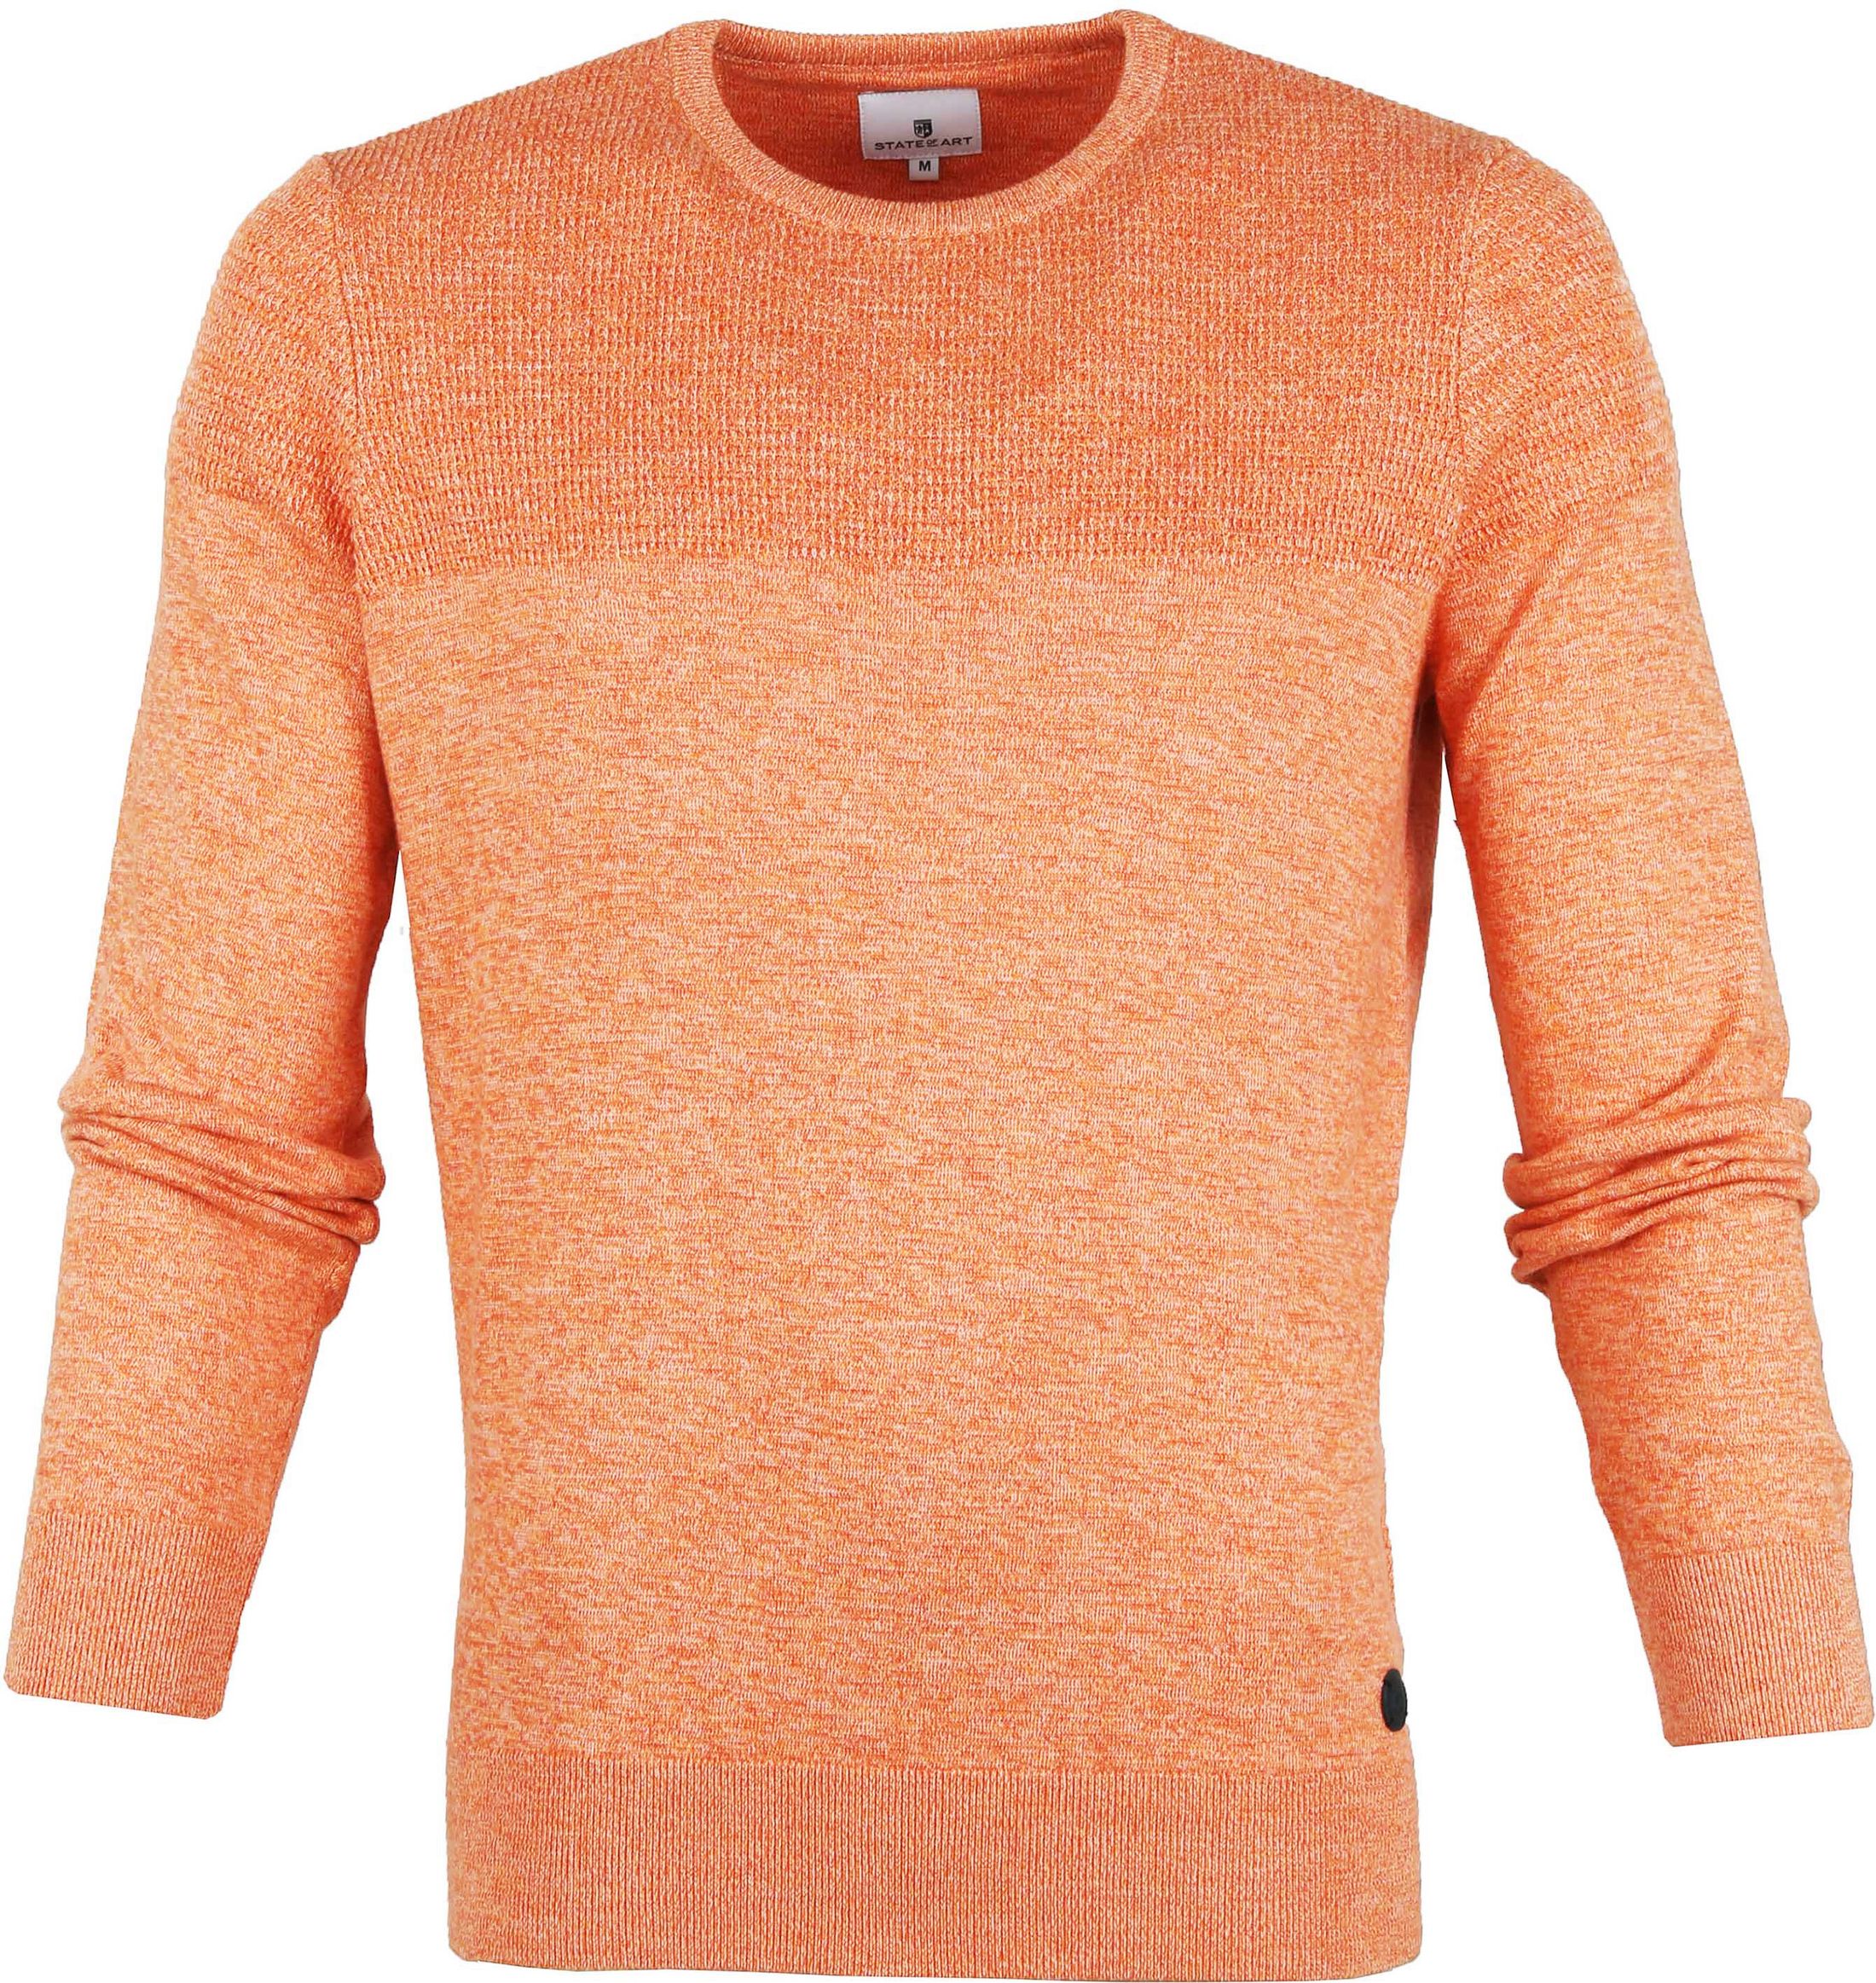 State Of Art Pullover Orange size 3XL